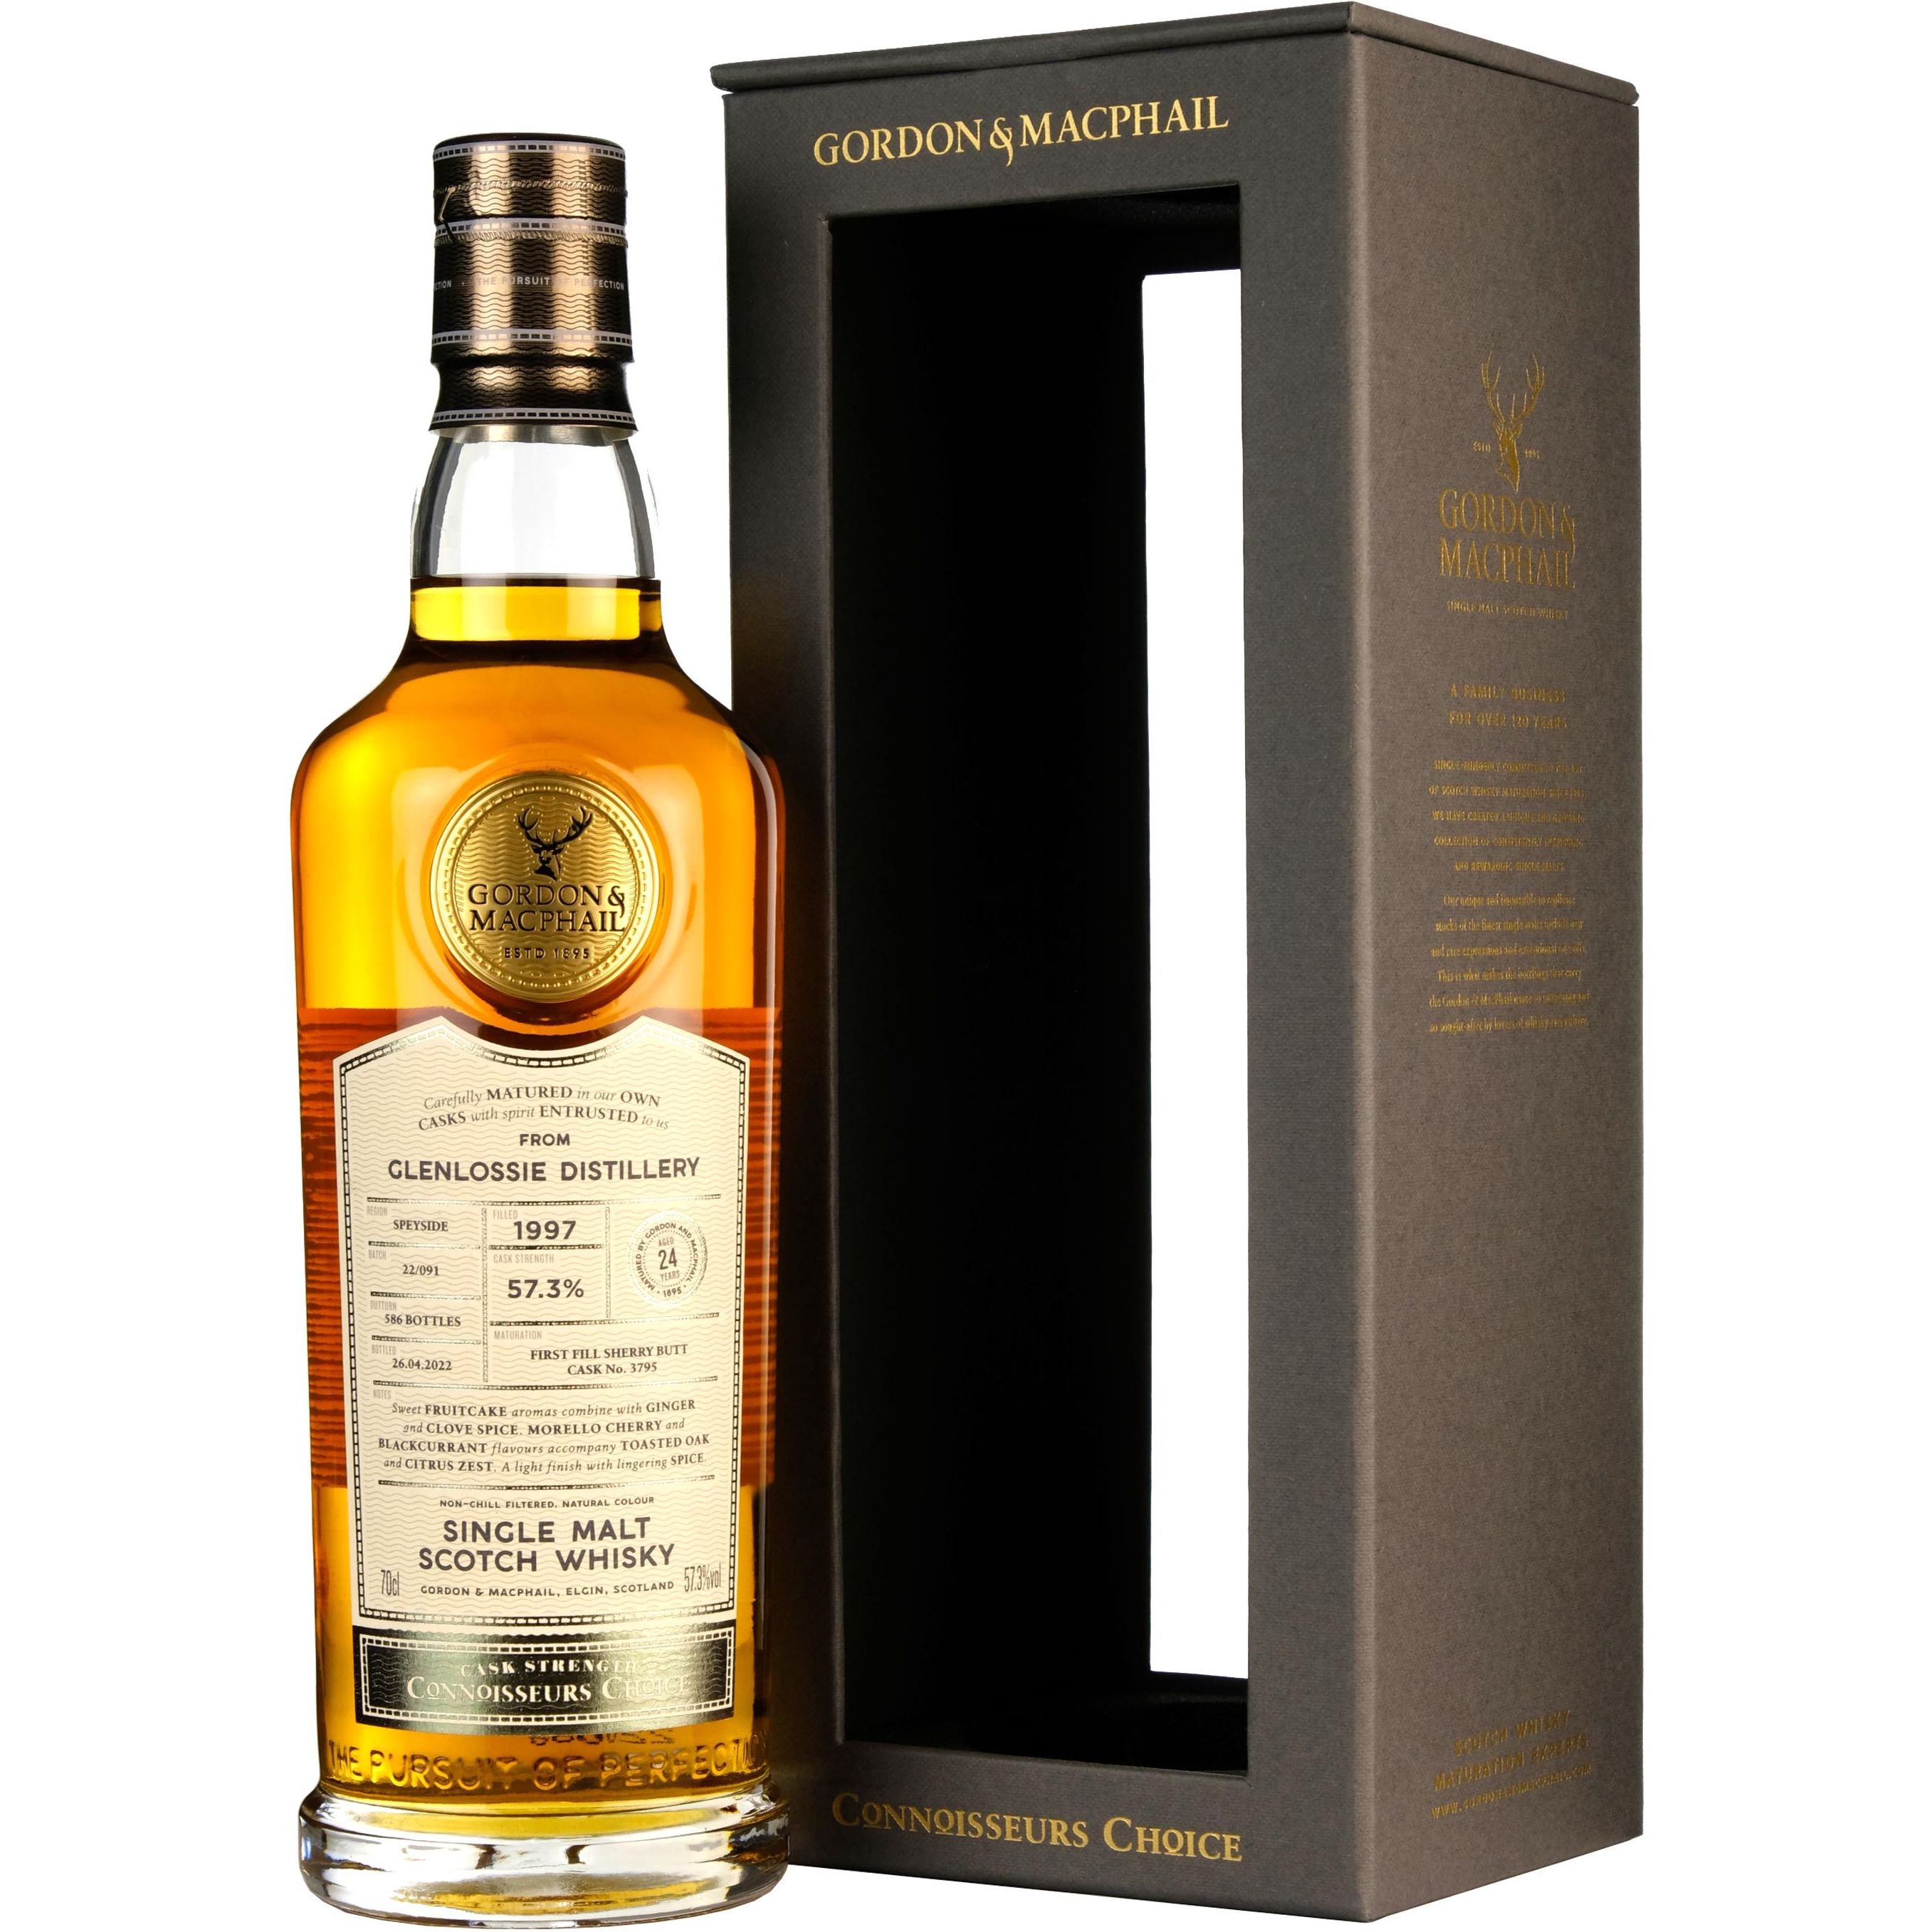 Віскі Gordon & MacPhail Connoisseurs Choice Glenlossie 1997 Single Malt Scotch Whisky 57.3% 0.7 л у подарунковій упаковці - фото 1